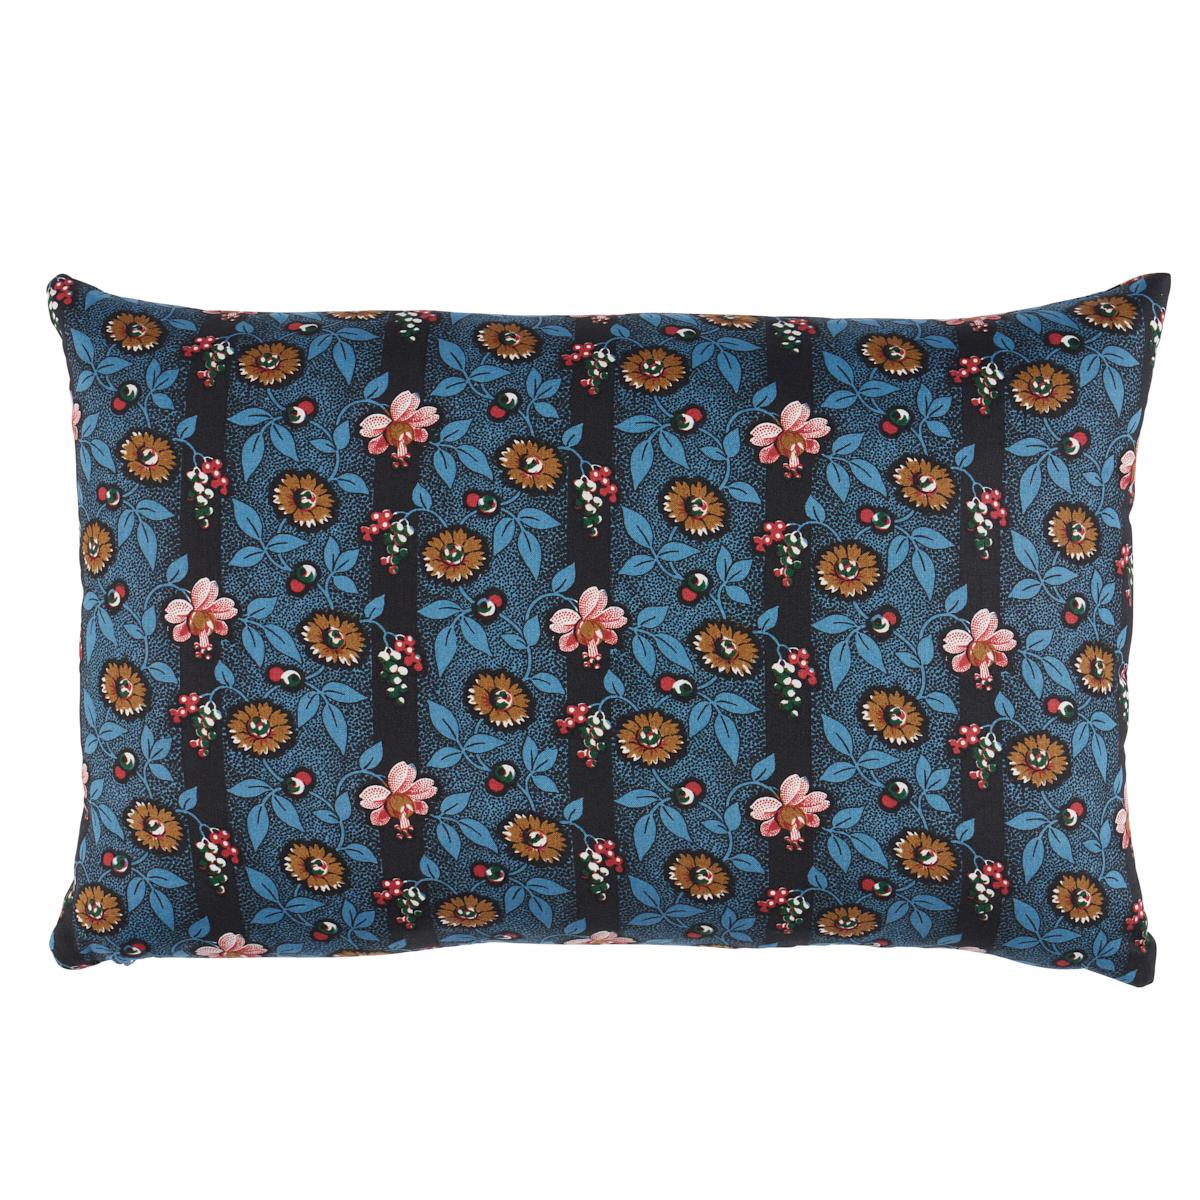 LaRue Stripe Pillow in Midnight 16 x 12" For Sale